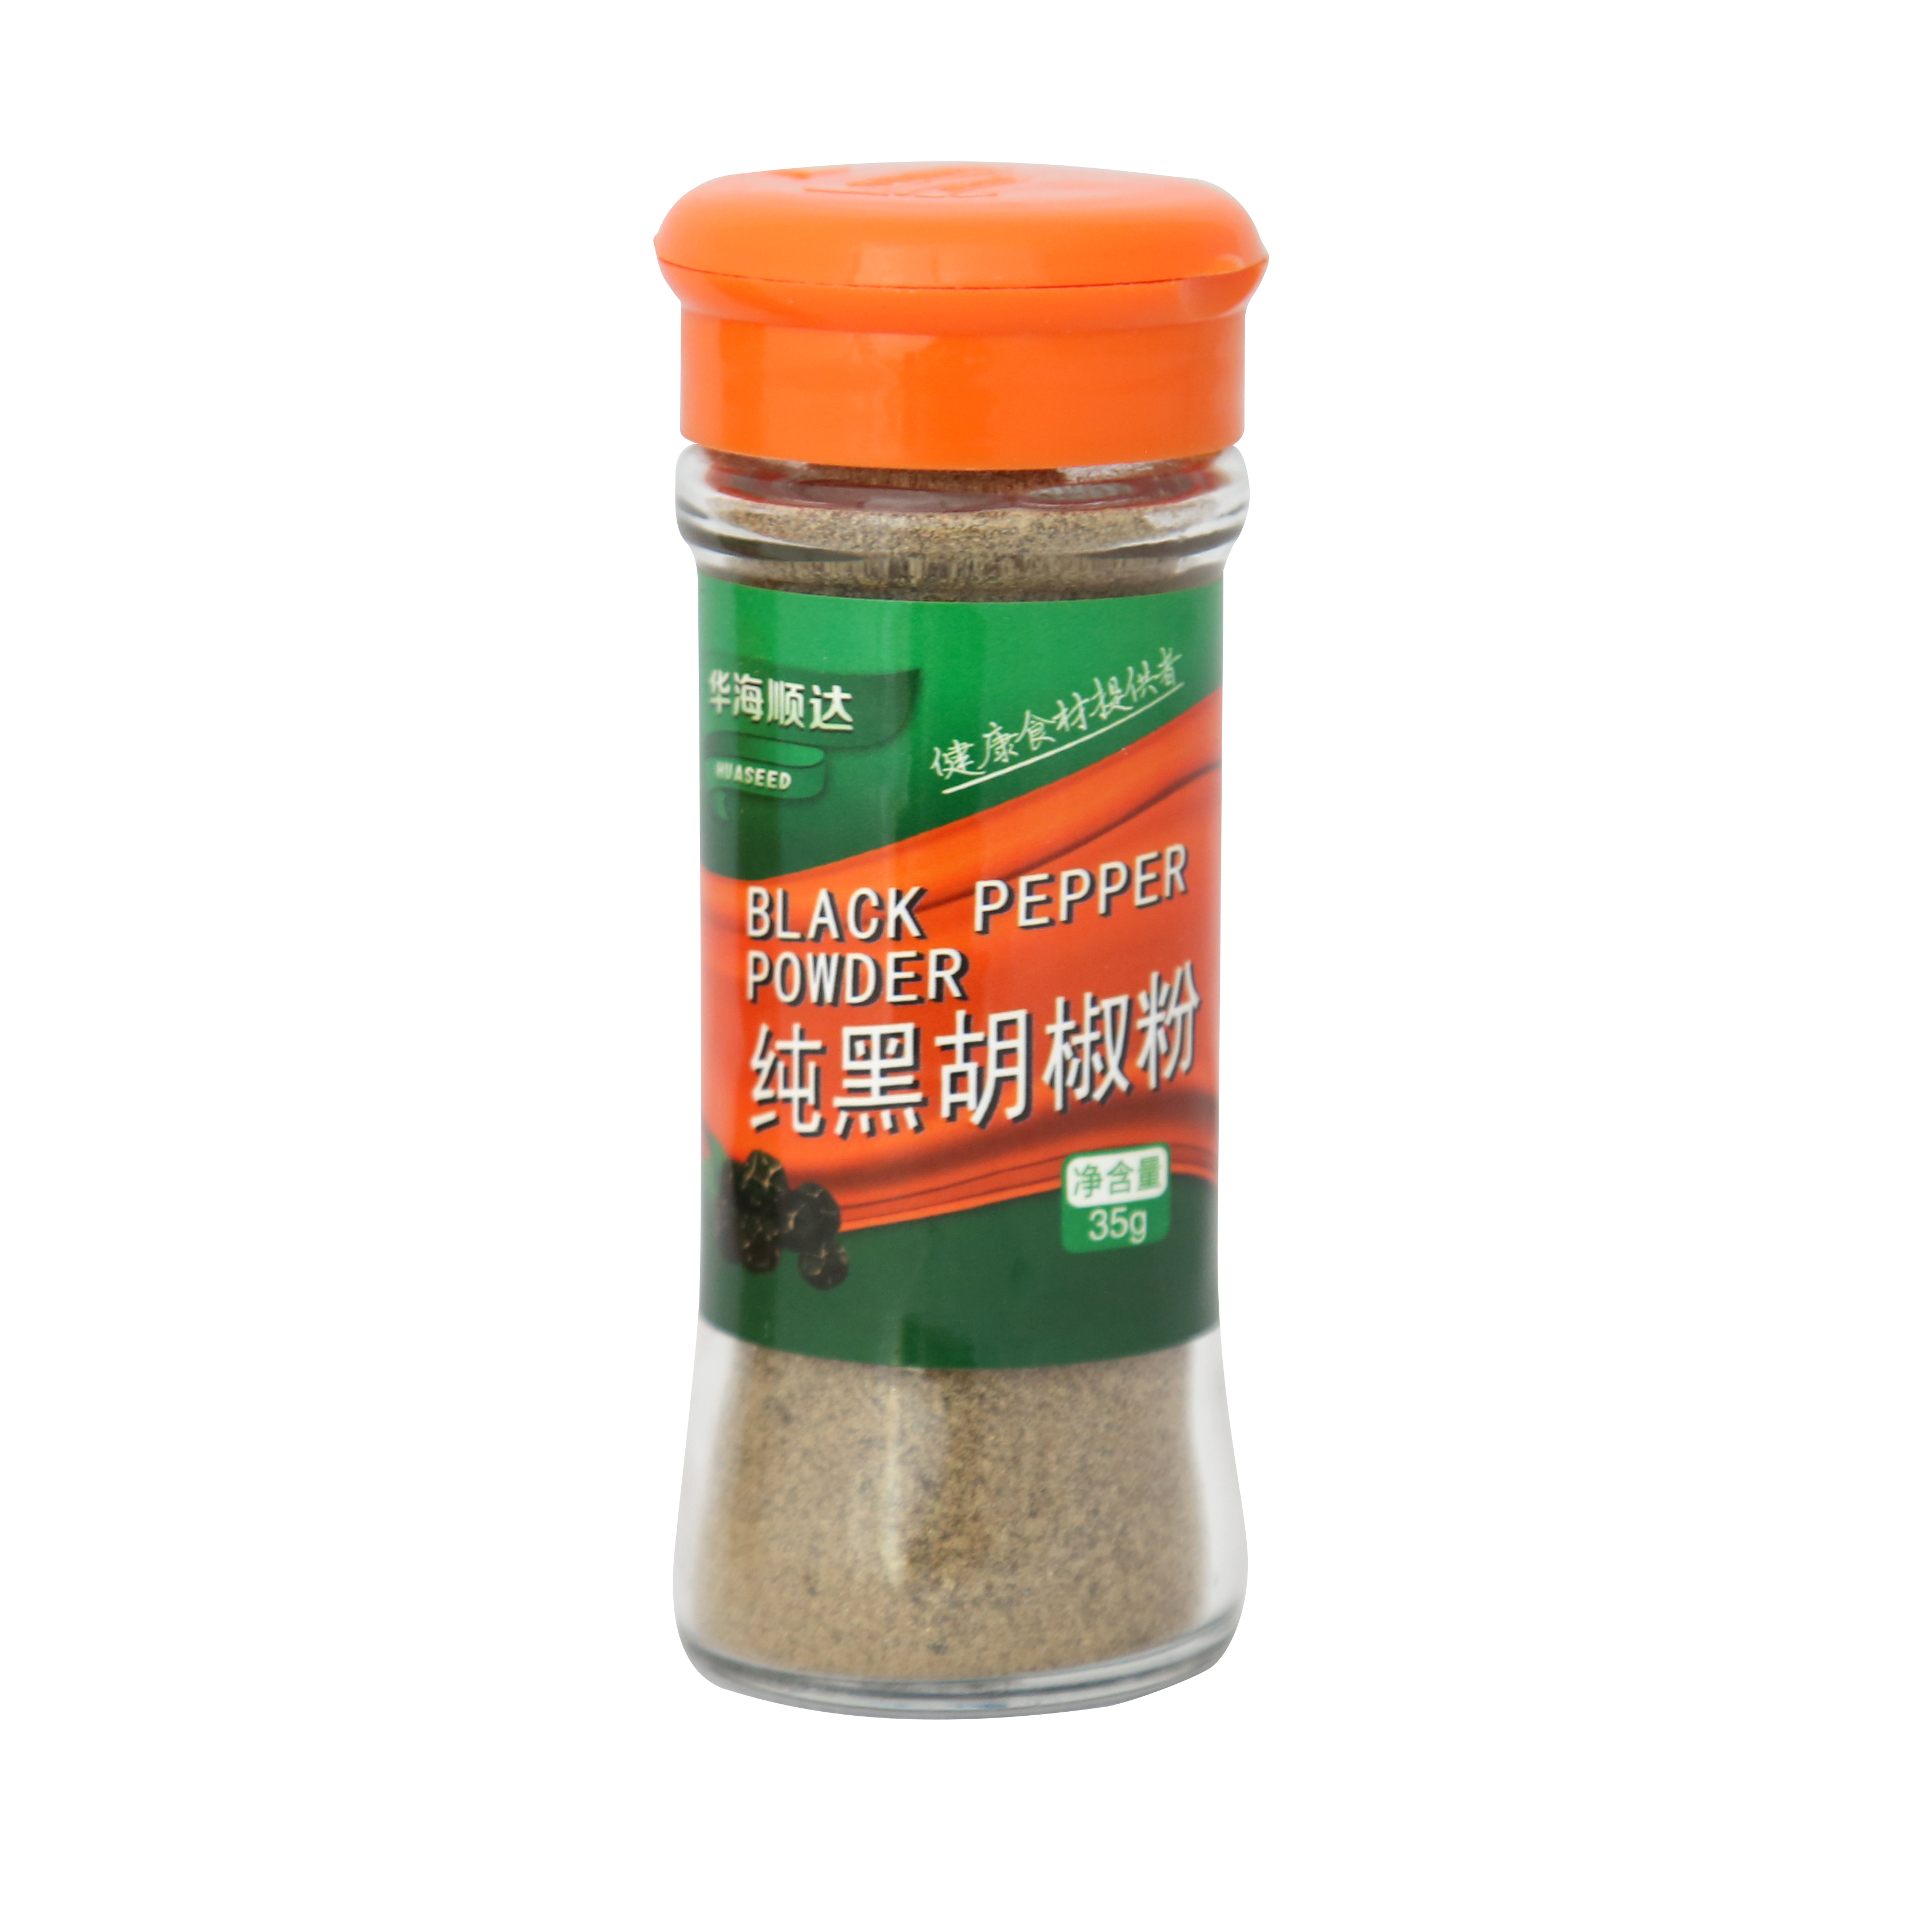 禾茵 黑胡椒粉(瓶) | HY Black Pepper Powder 36g - HappyGo Asian Market